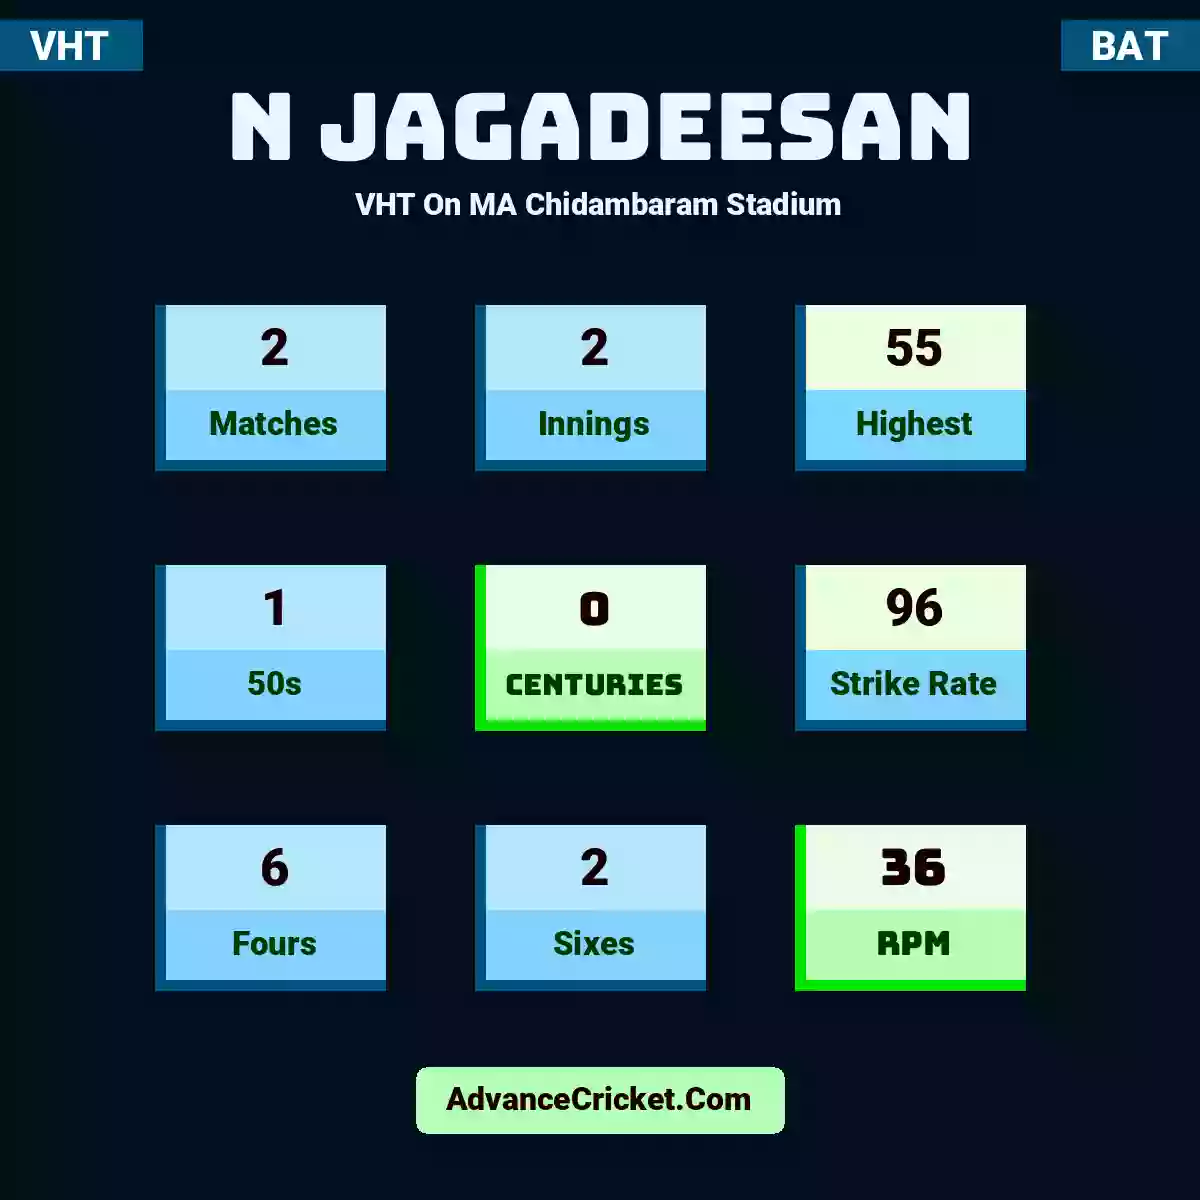 N Jagadeesan VHT  On MA Chidambaram Stadium, N Jagadeesan played 2 matches, scored 55 runs as highest, 1 half-centuries, and 0 centuries, with a strike rate of 96. N.Jagadeesan hit 6 fours and 2 sixes, with an RPM of 36.